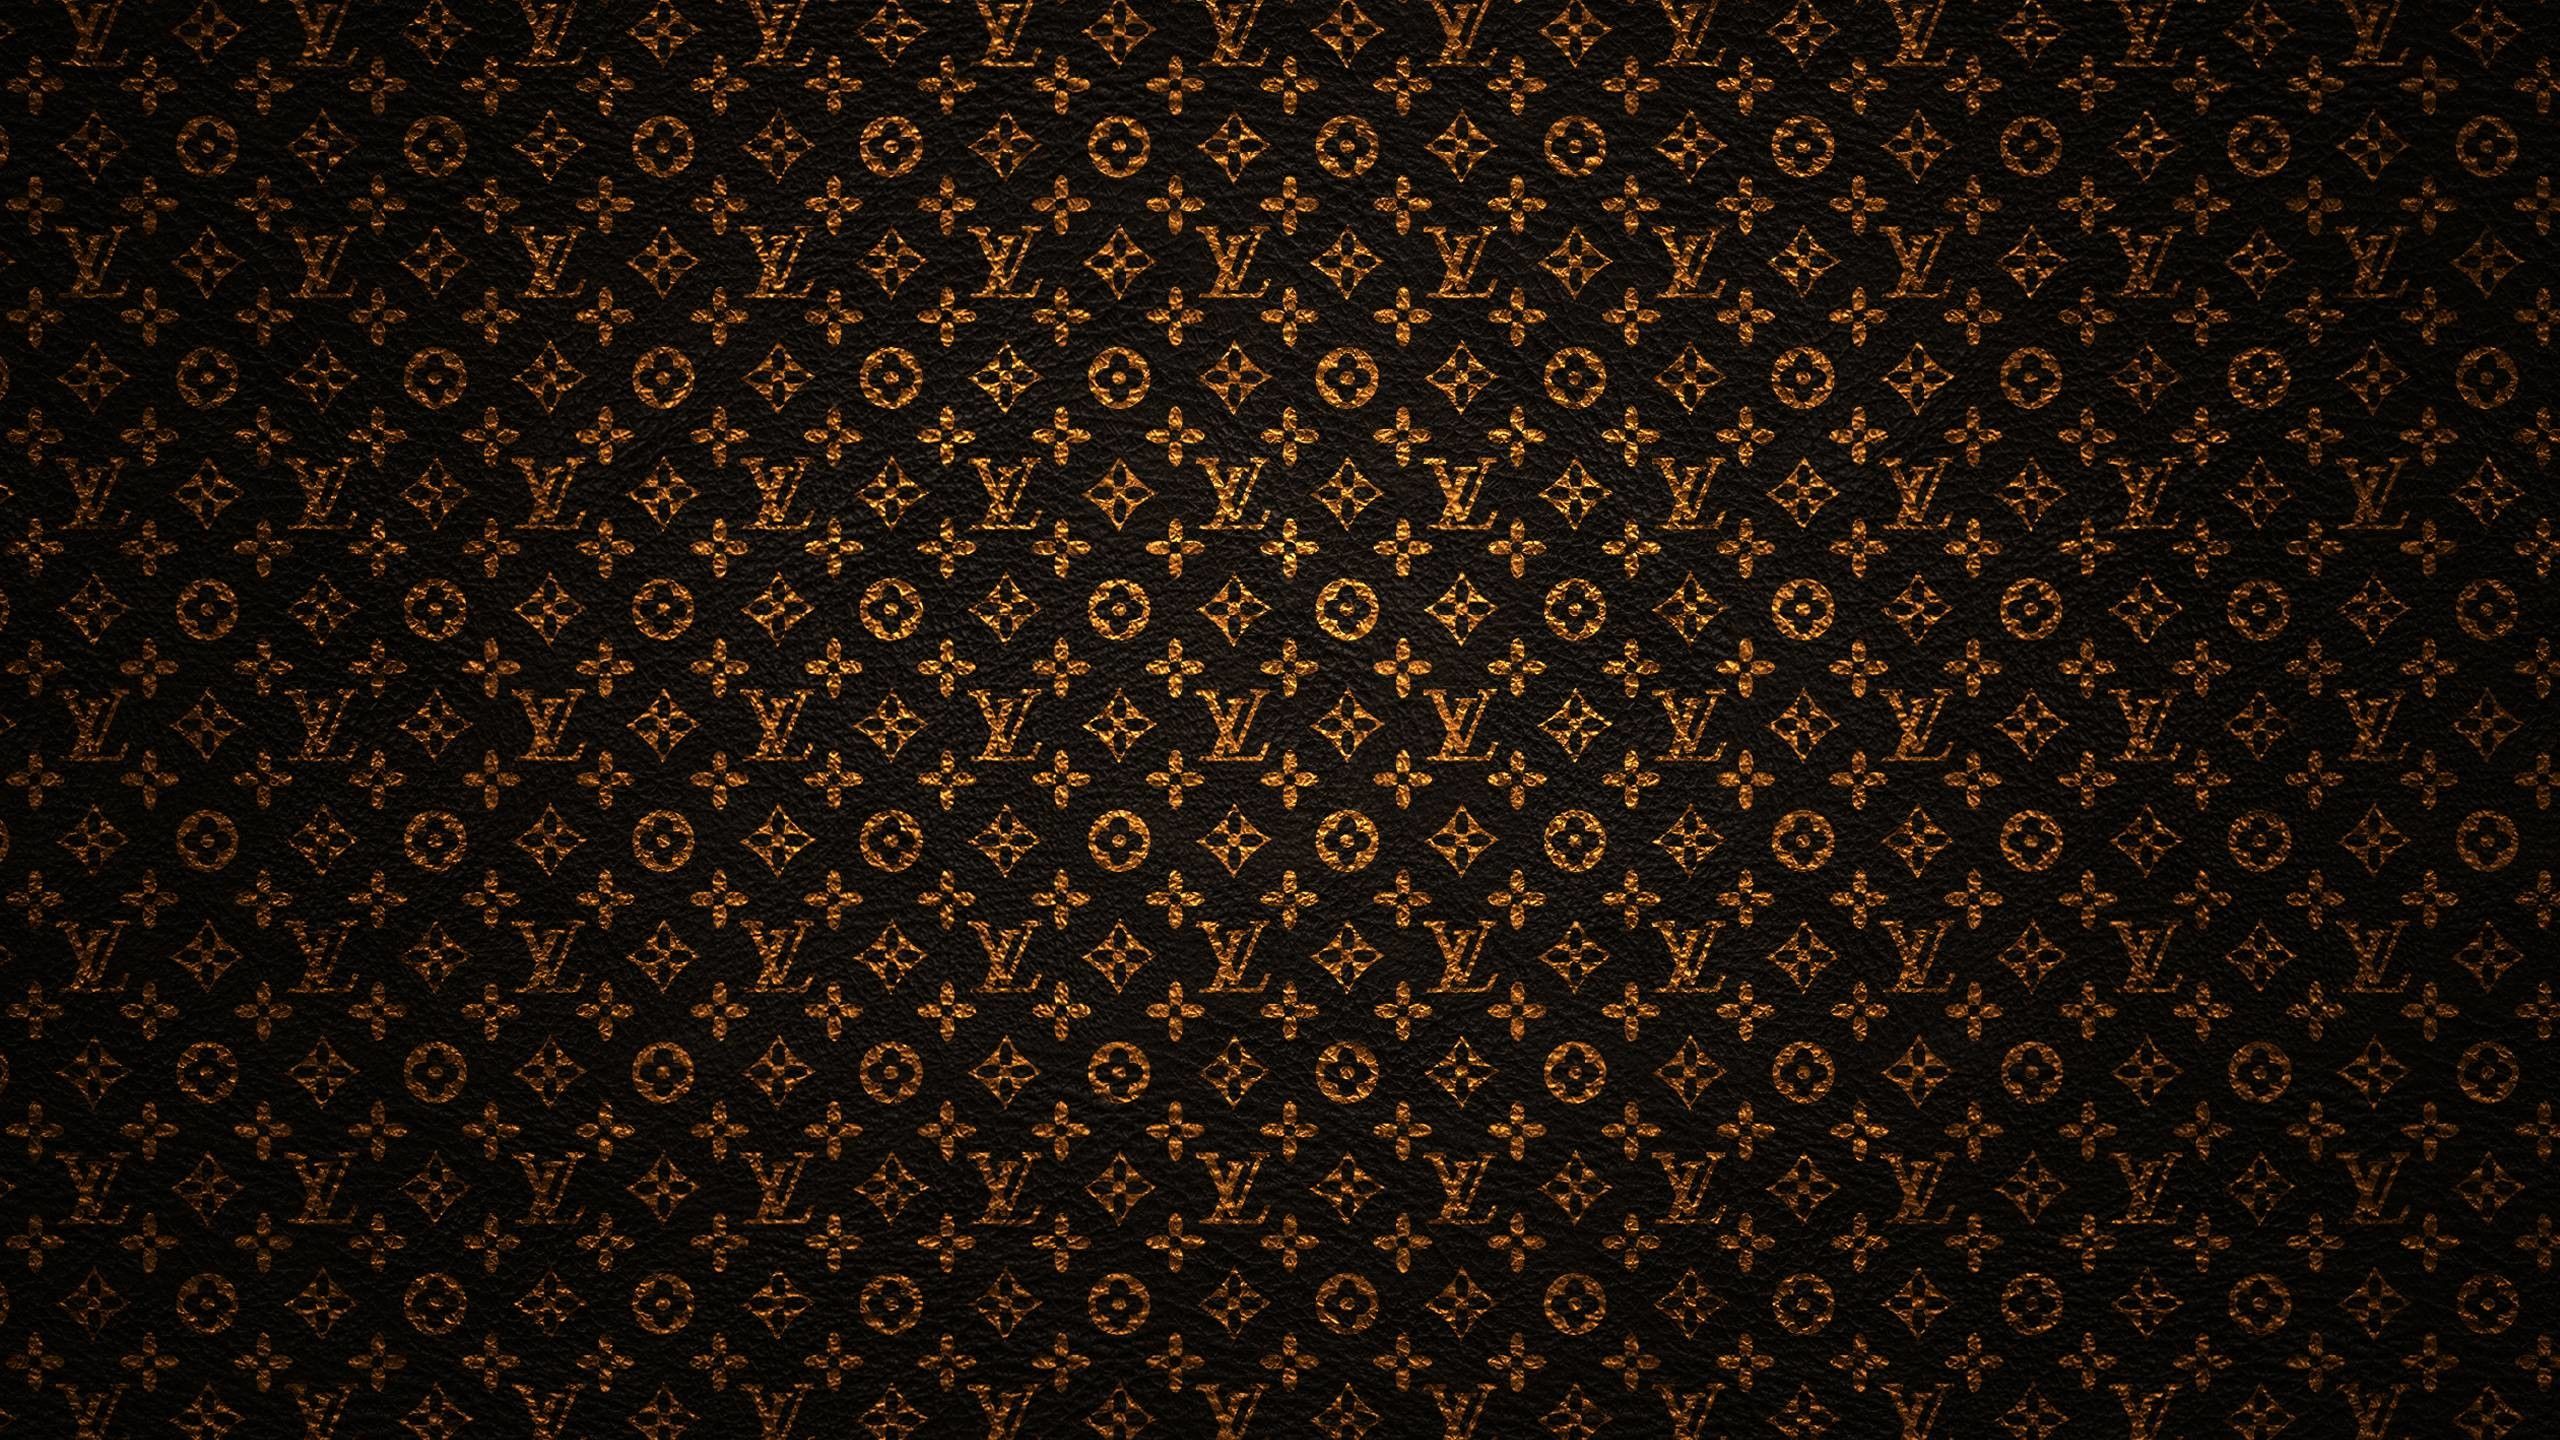 Black and White Louis Vuitton Monogram - Luxurydotcom - iTunes app photo  Louis  vuitton iphone wallpaper, White louis vuitton, Louis vuitton background